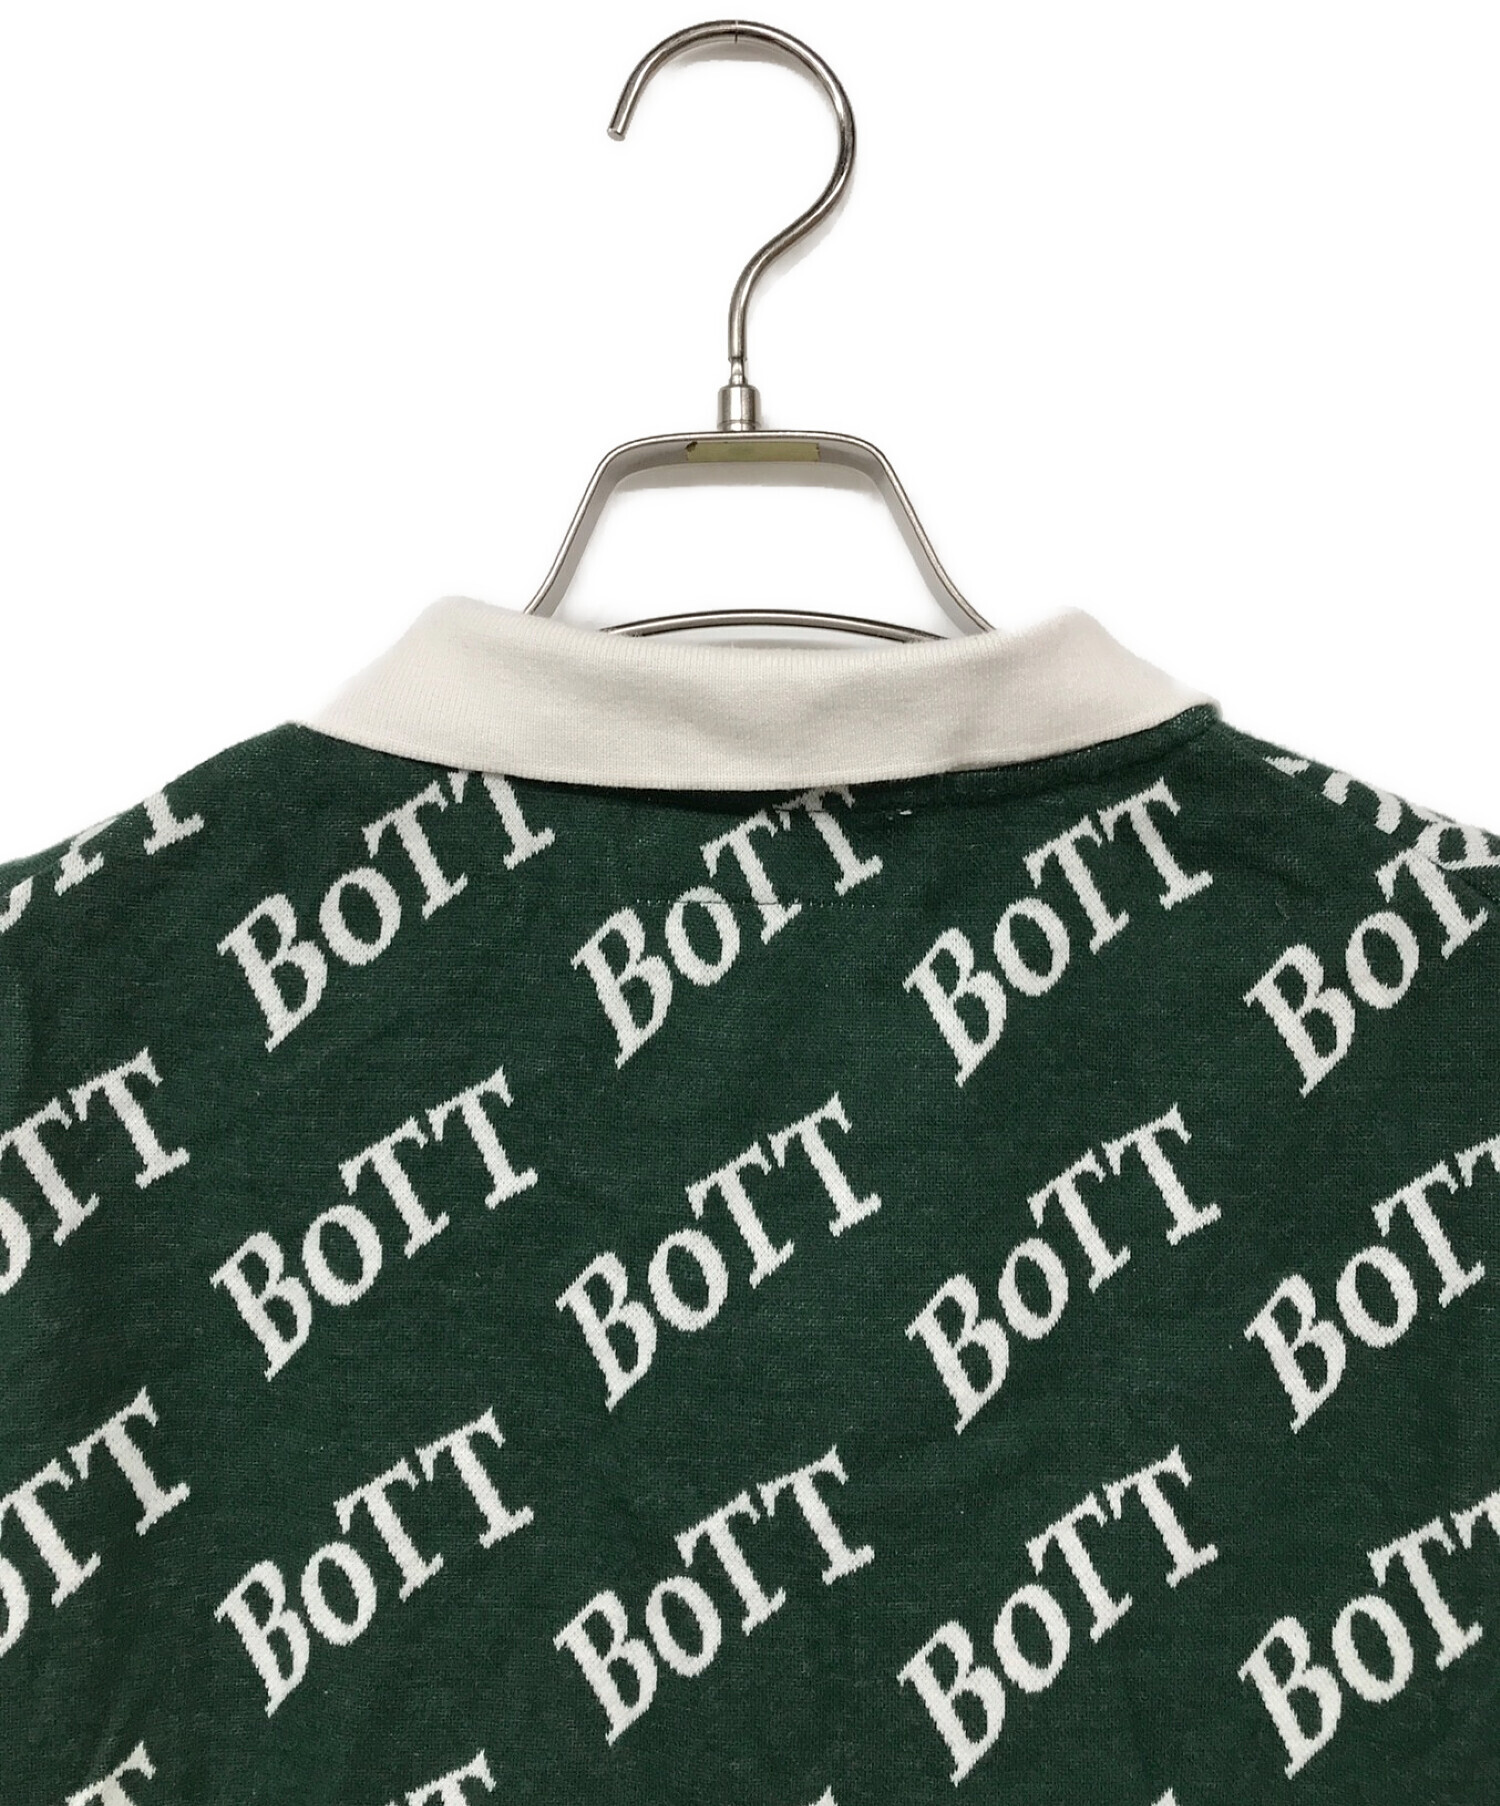 BoTT (ボット) 総柄ポロシャツ グリーン サイズ:XL